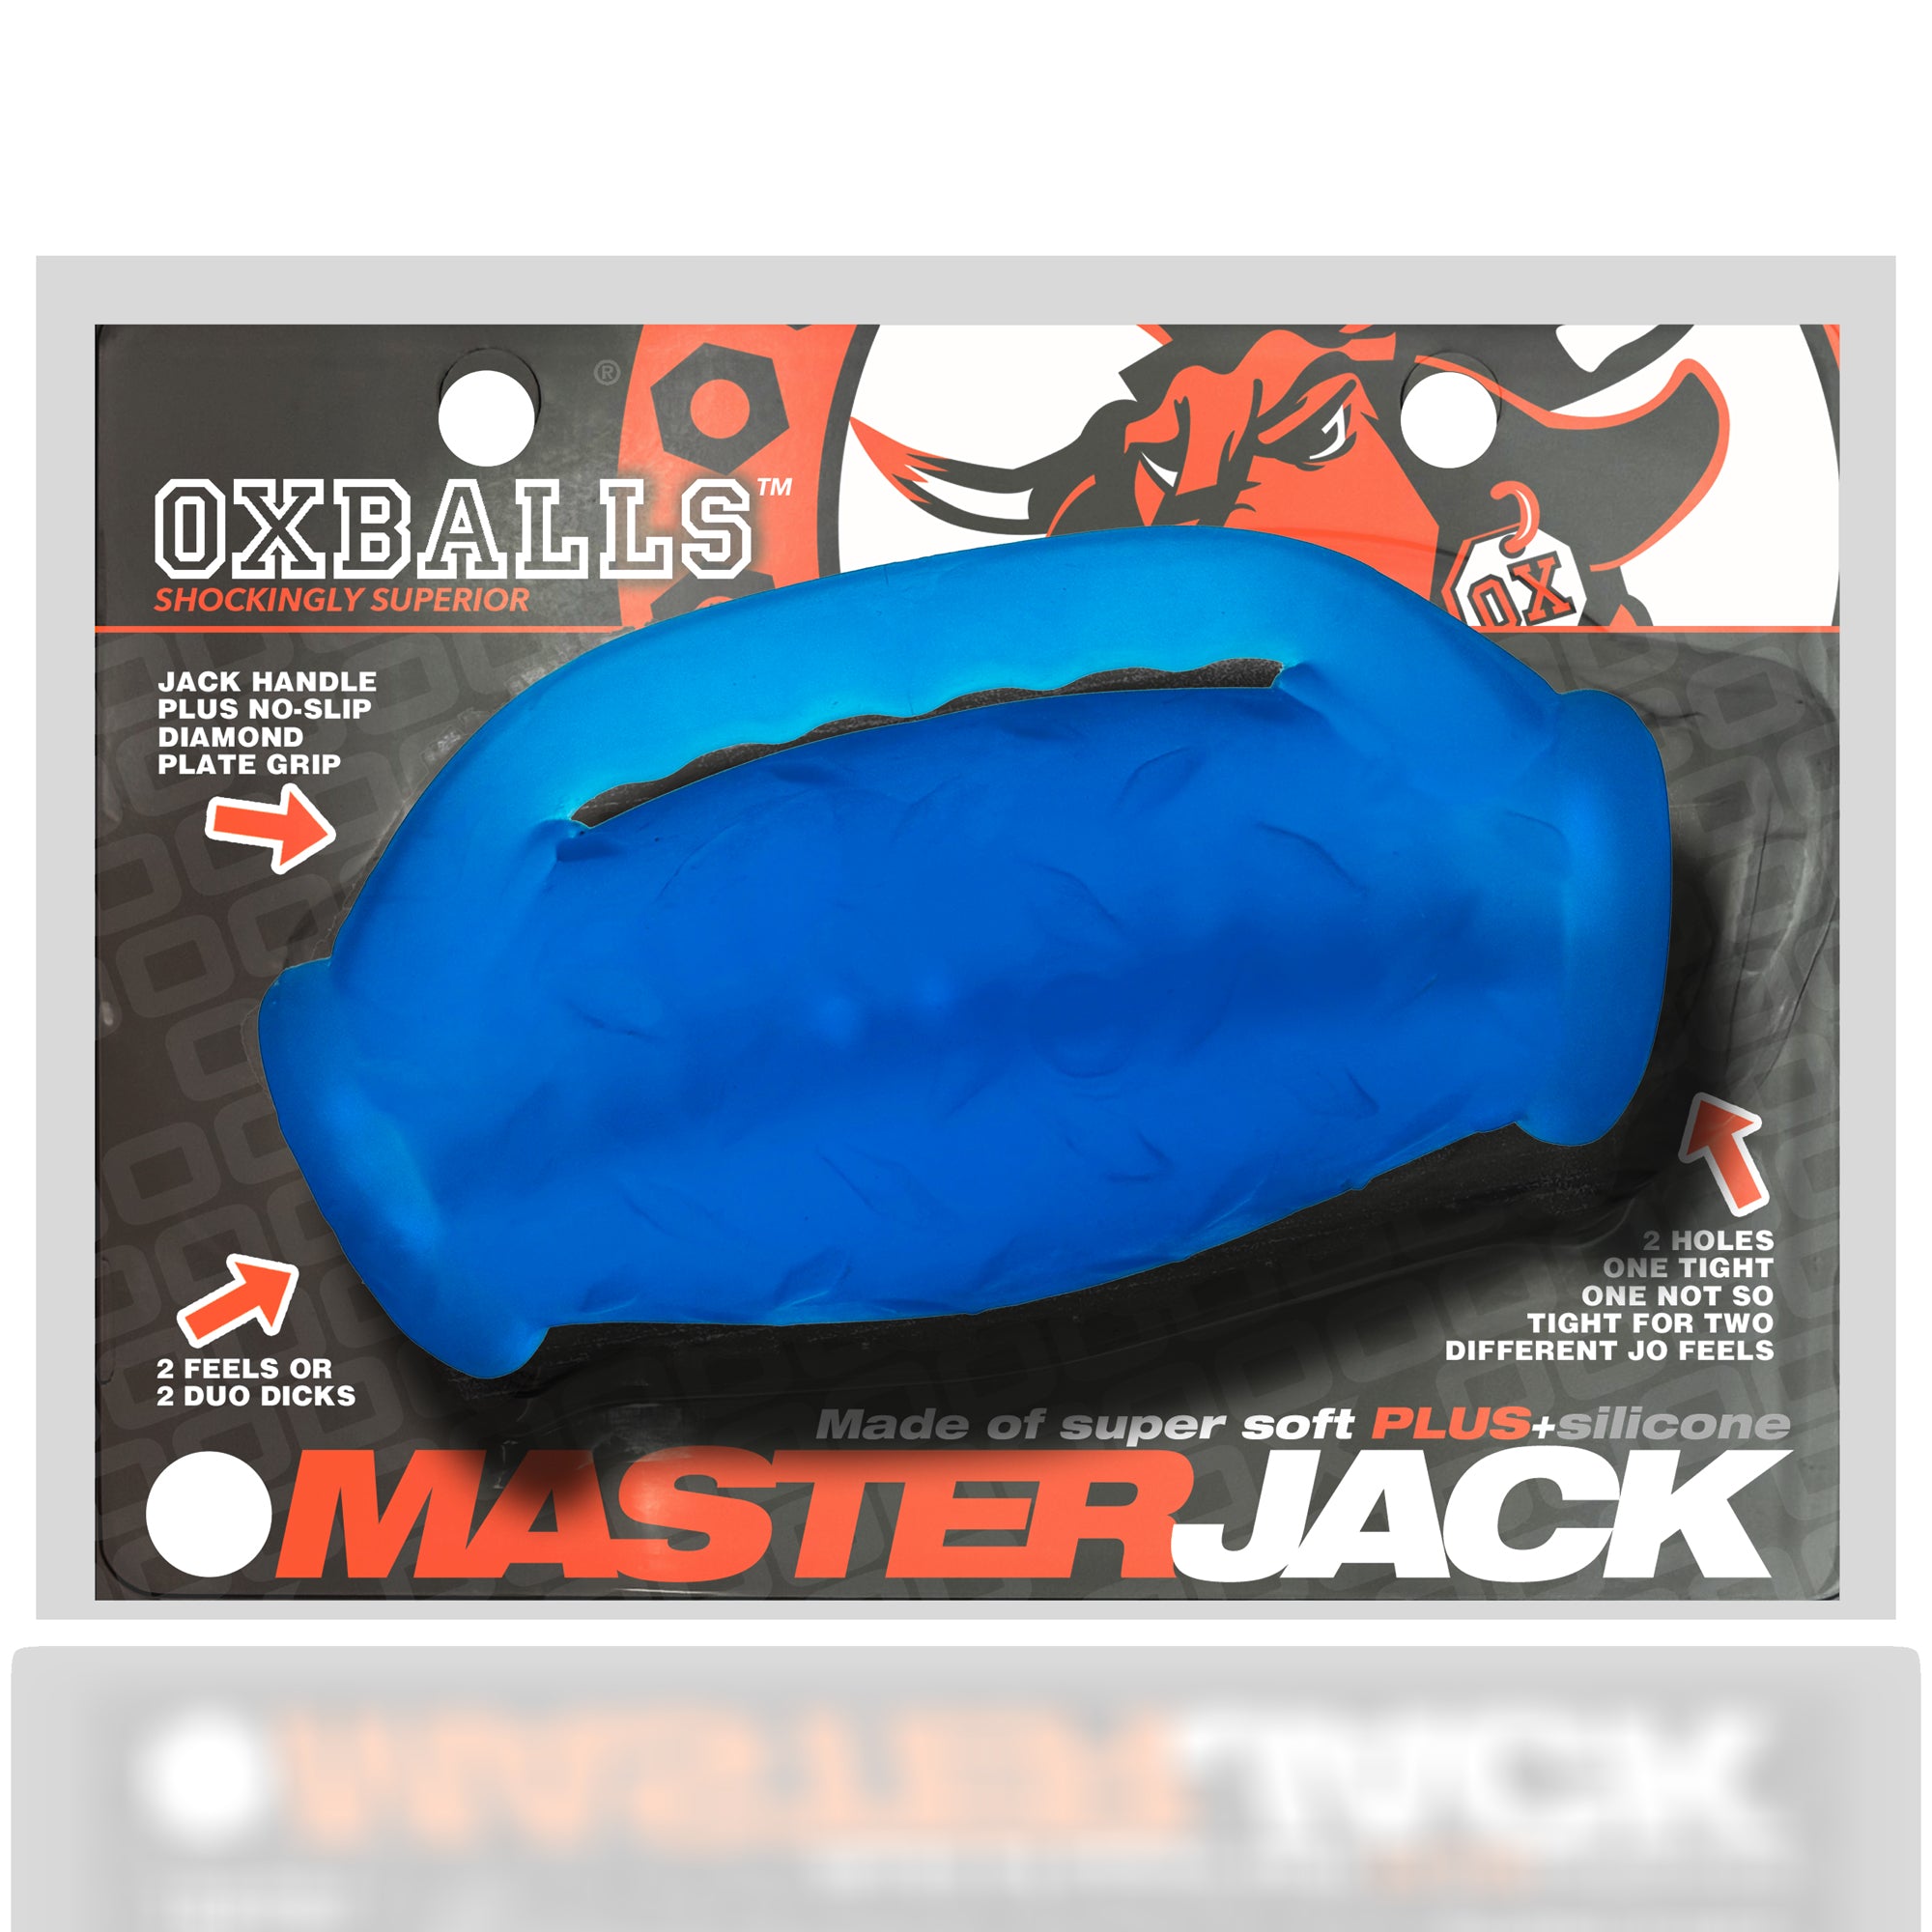 OxBalls Masterjack Double Penetration Jo - Blue Ice